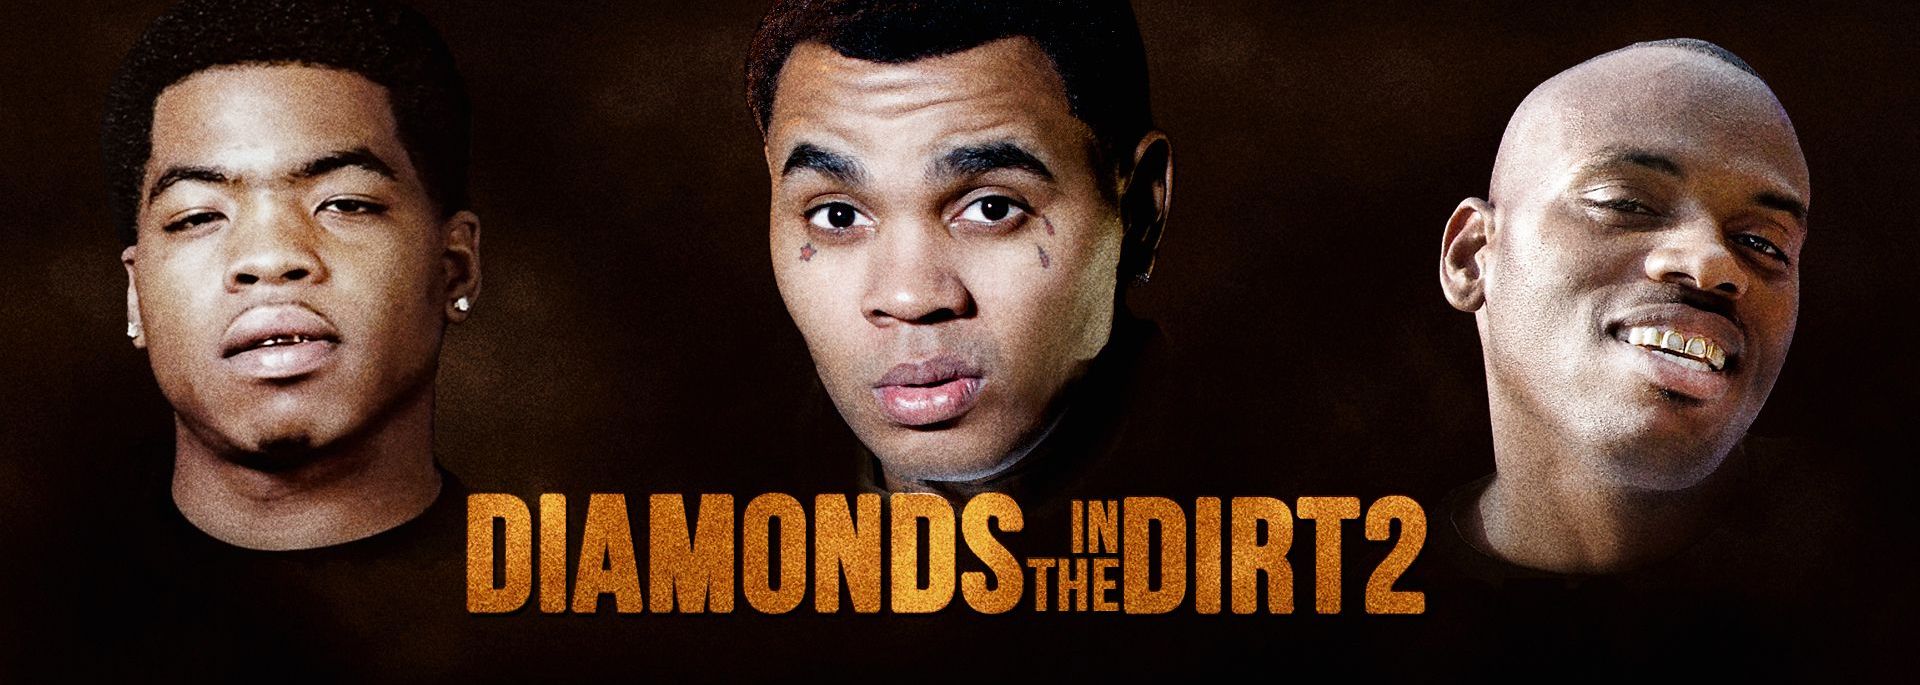 Diamonds in the Dirt 2